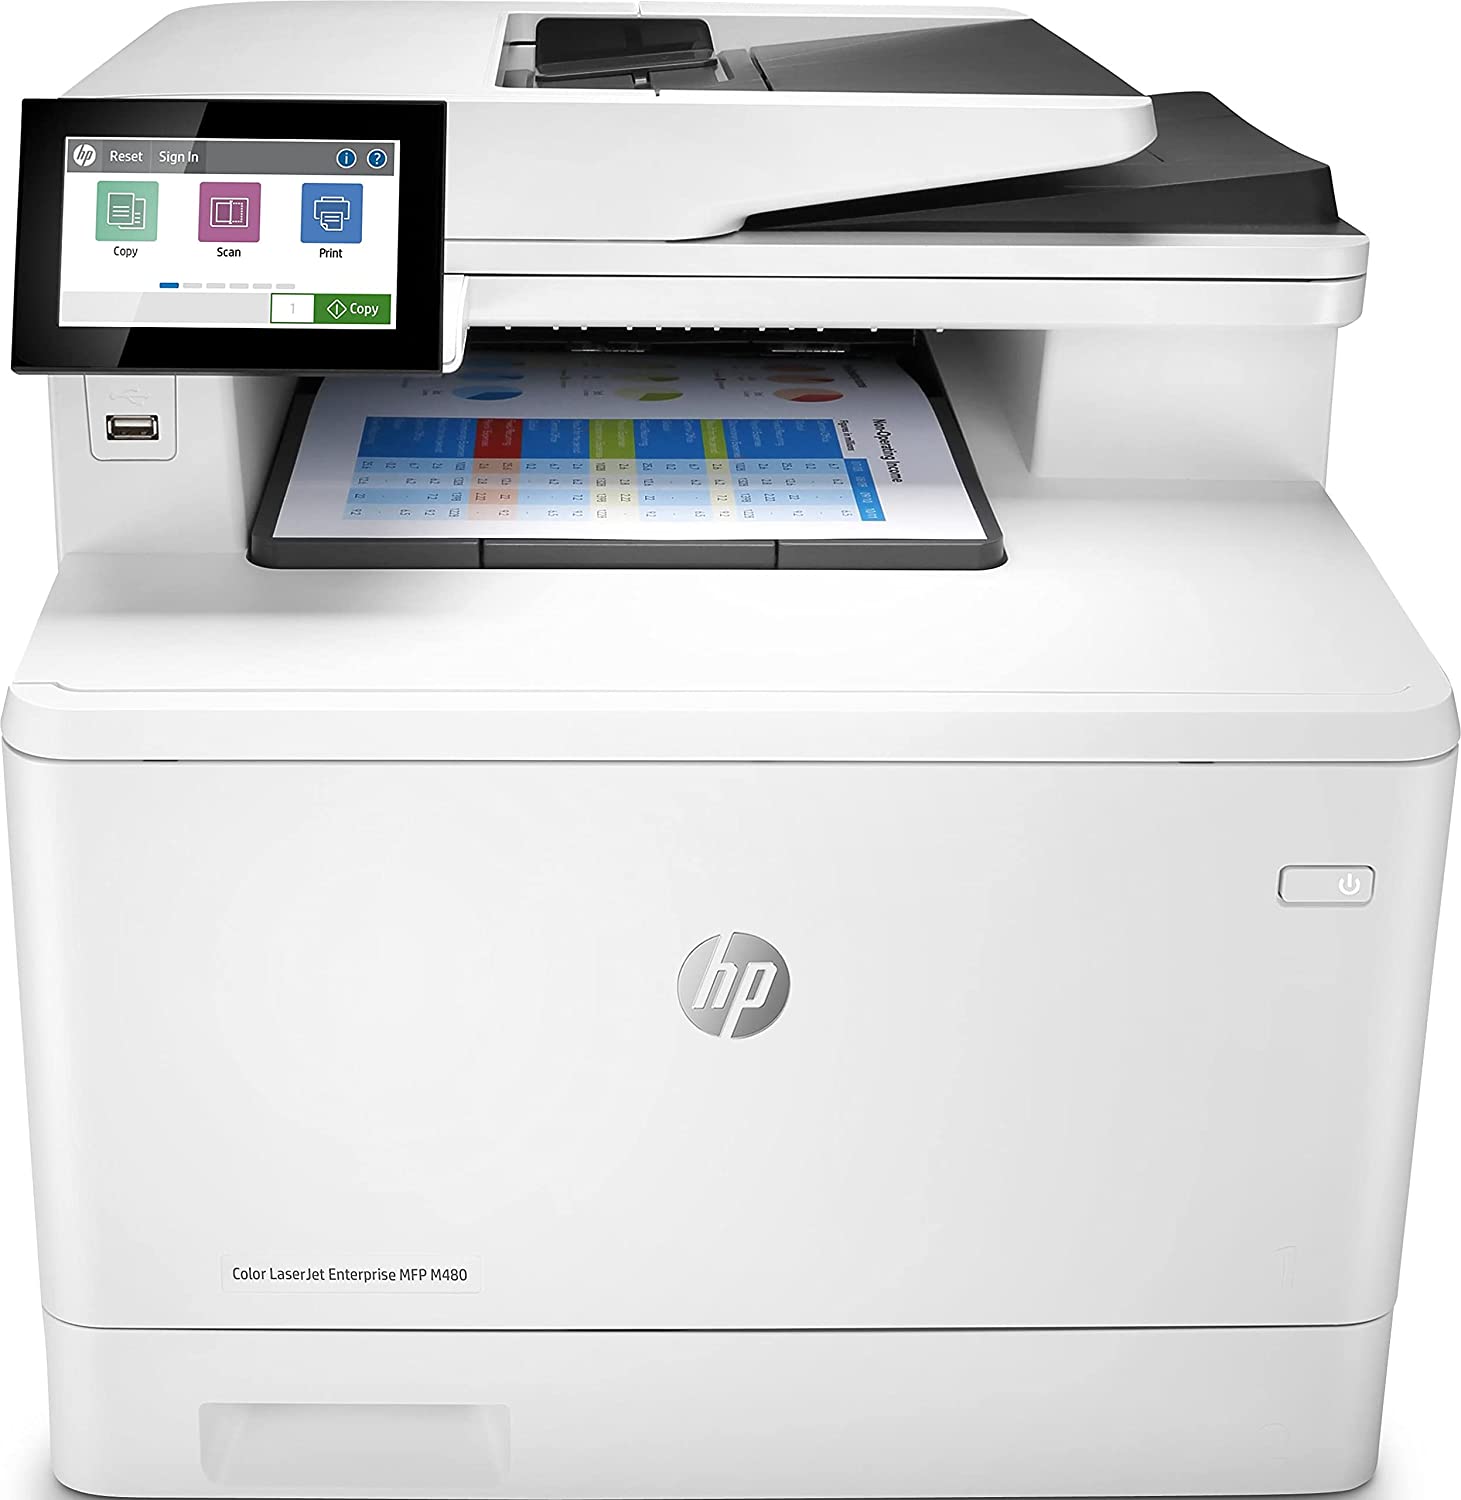 HP LaserJet Enterprise M480f Impresora Multifuncion Laser Color Duplex 27ppm